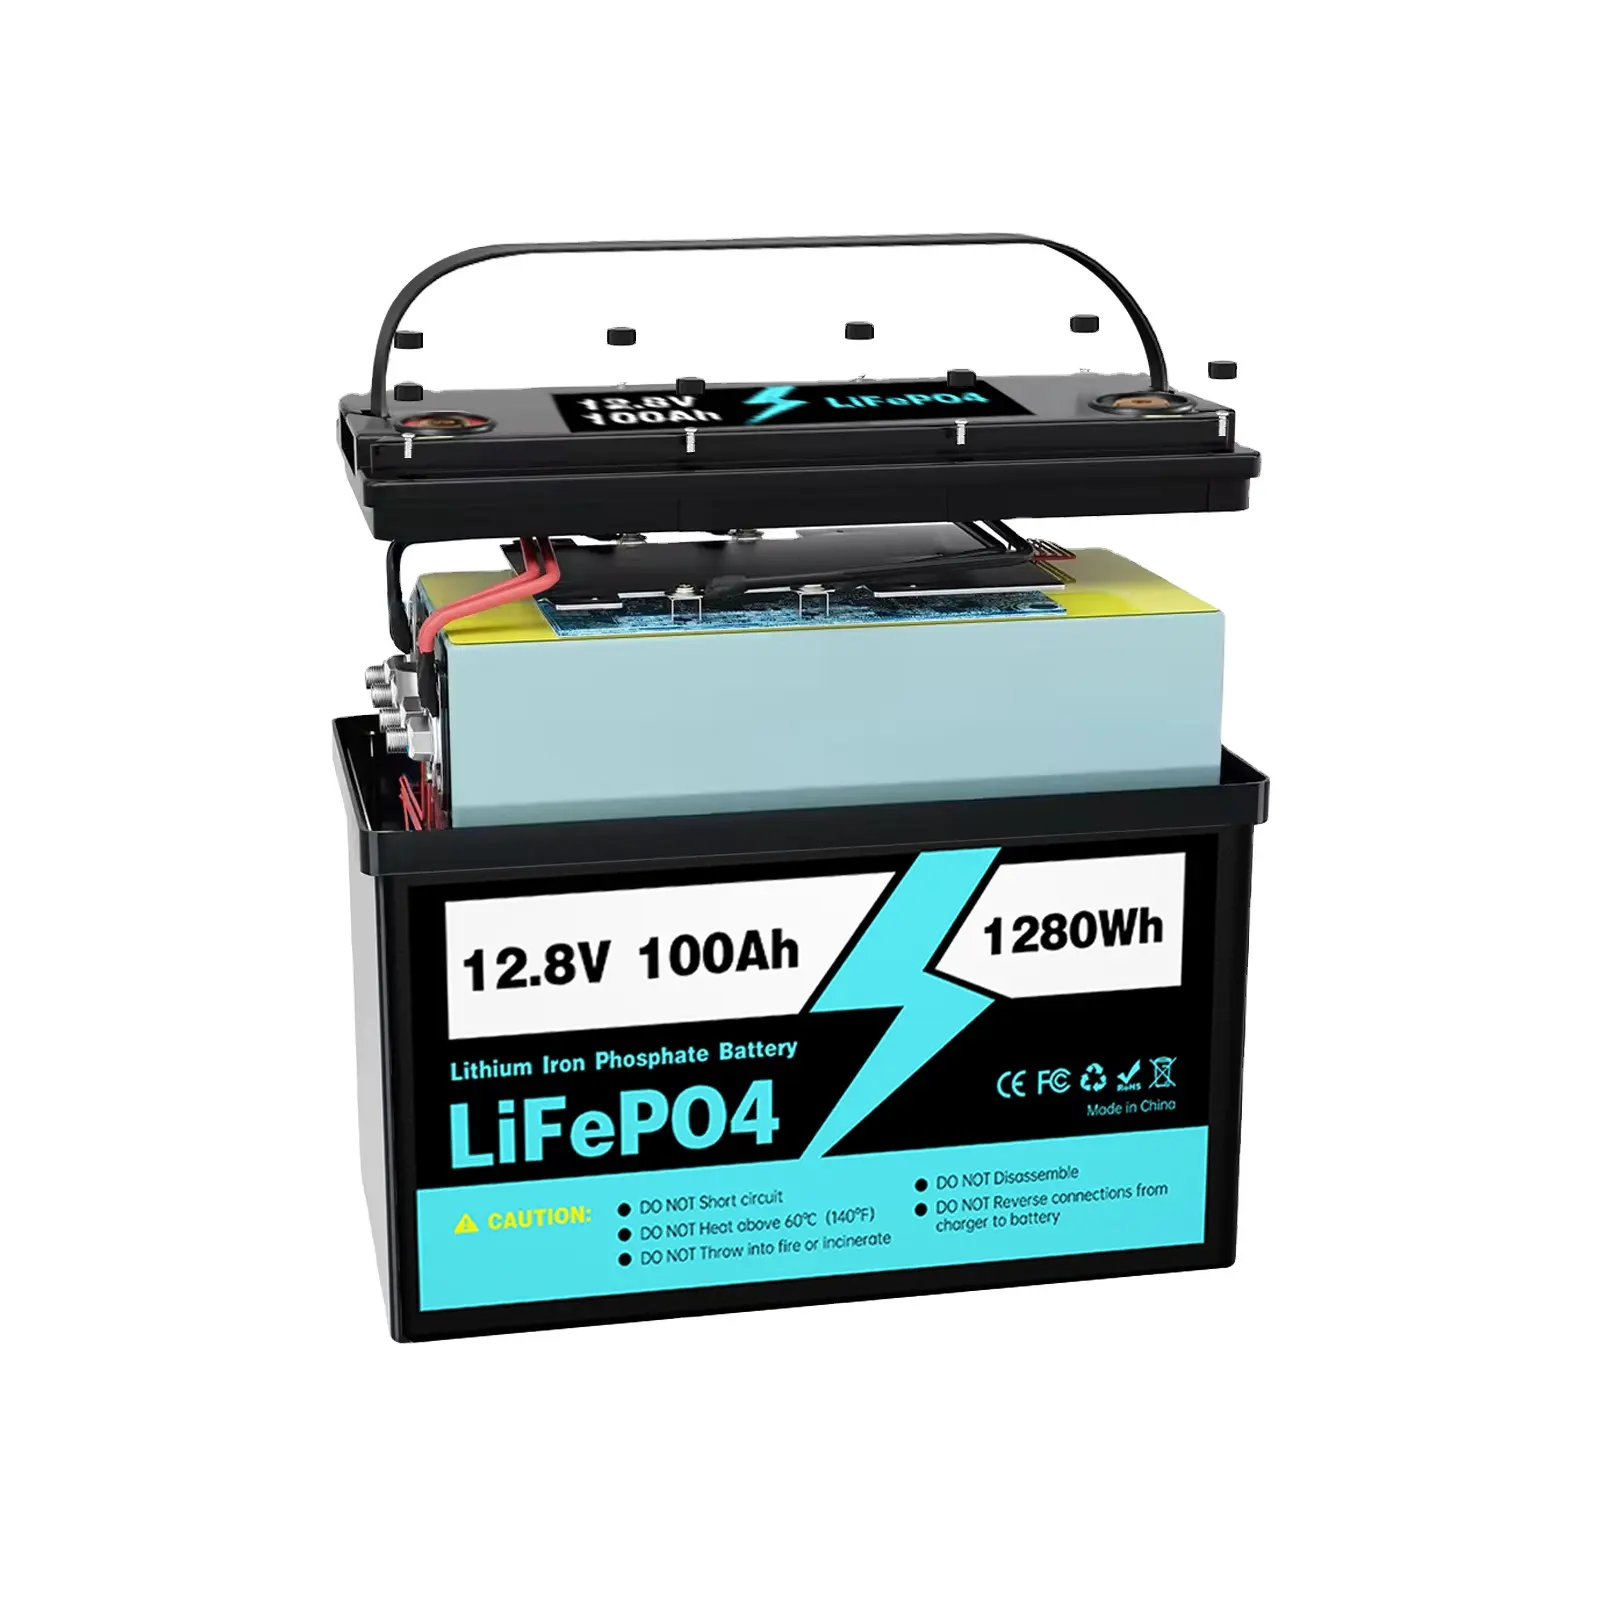 Best Selling Energy Storage Battery Trolling Motor Lifepo Scooter Group 31 Powerwheels Lithium Phosphate For Wholesale